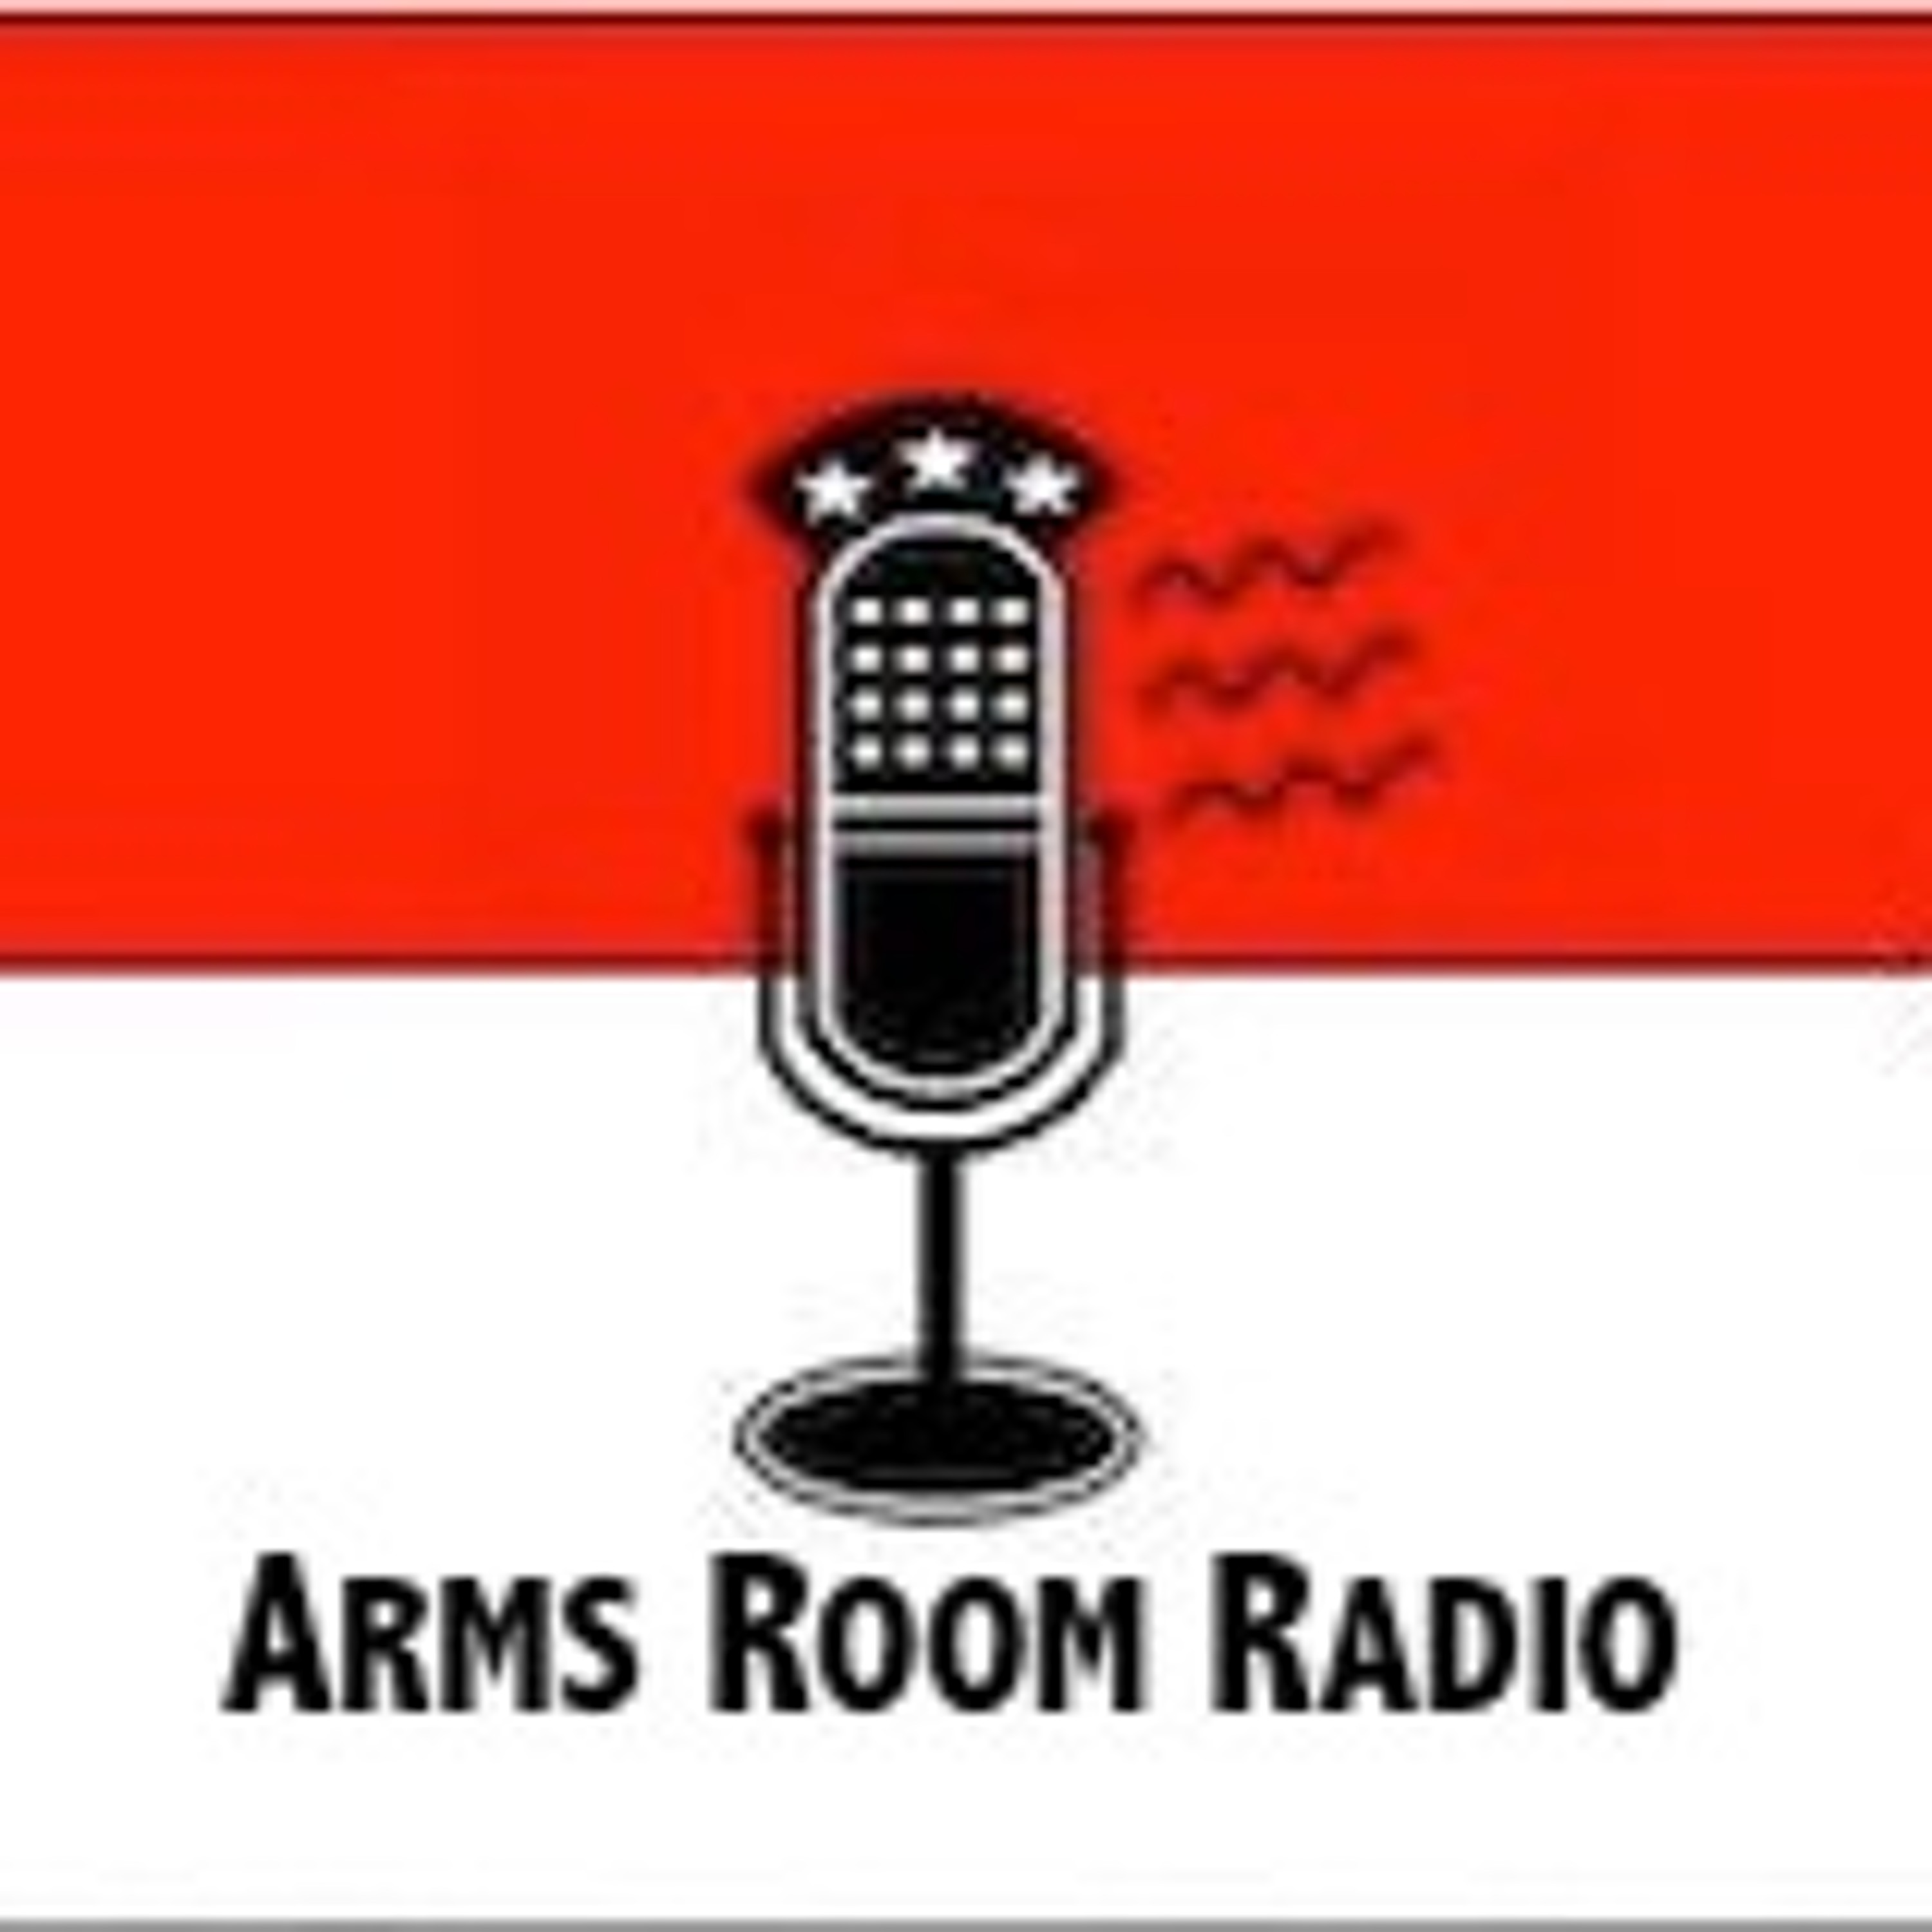 ArmsRoomRadio 03.13.21 Todd Fossey, and the Naked Cowboy